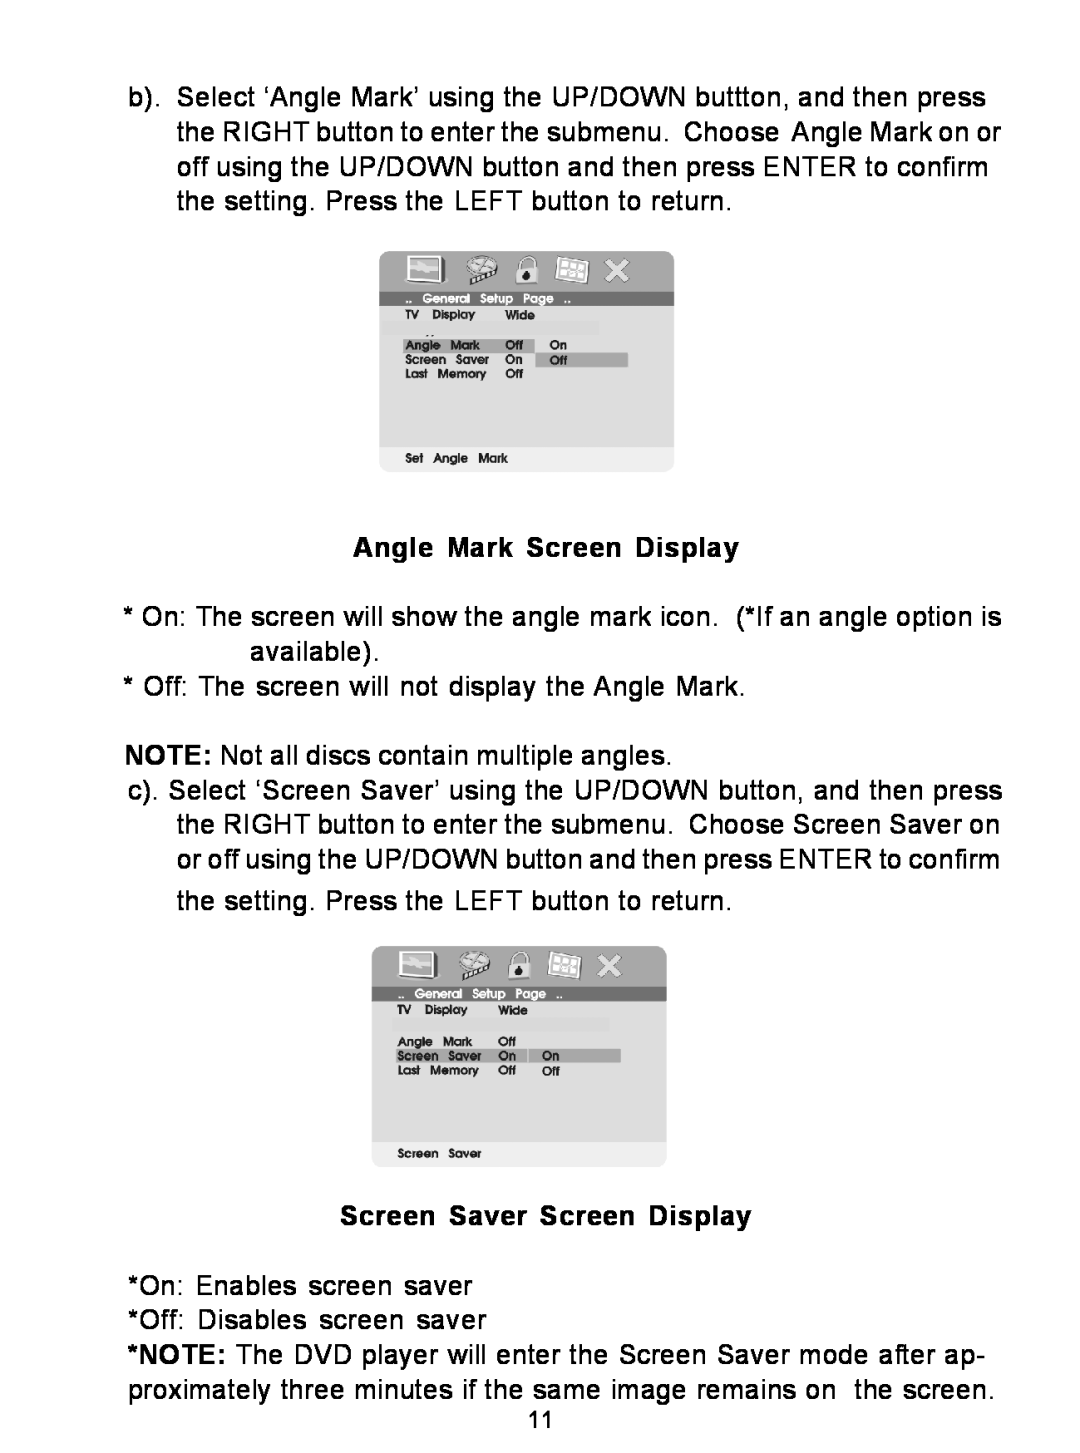 Audiovox D1726 manual Angle Mark Screen Display, Screen Saver Screen Display 